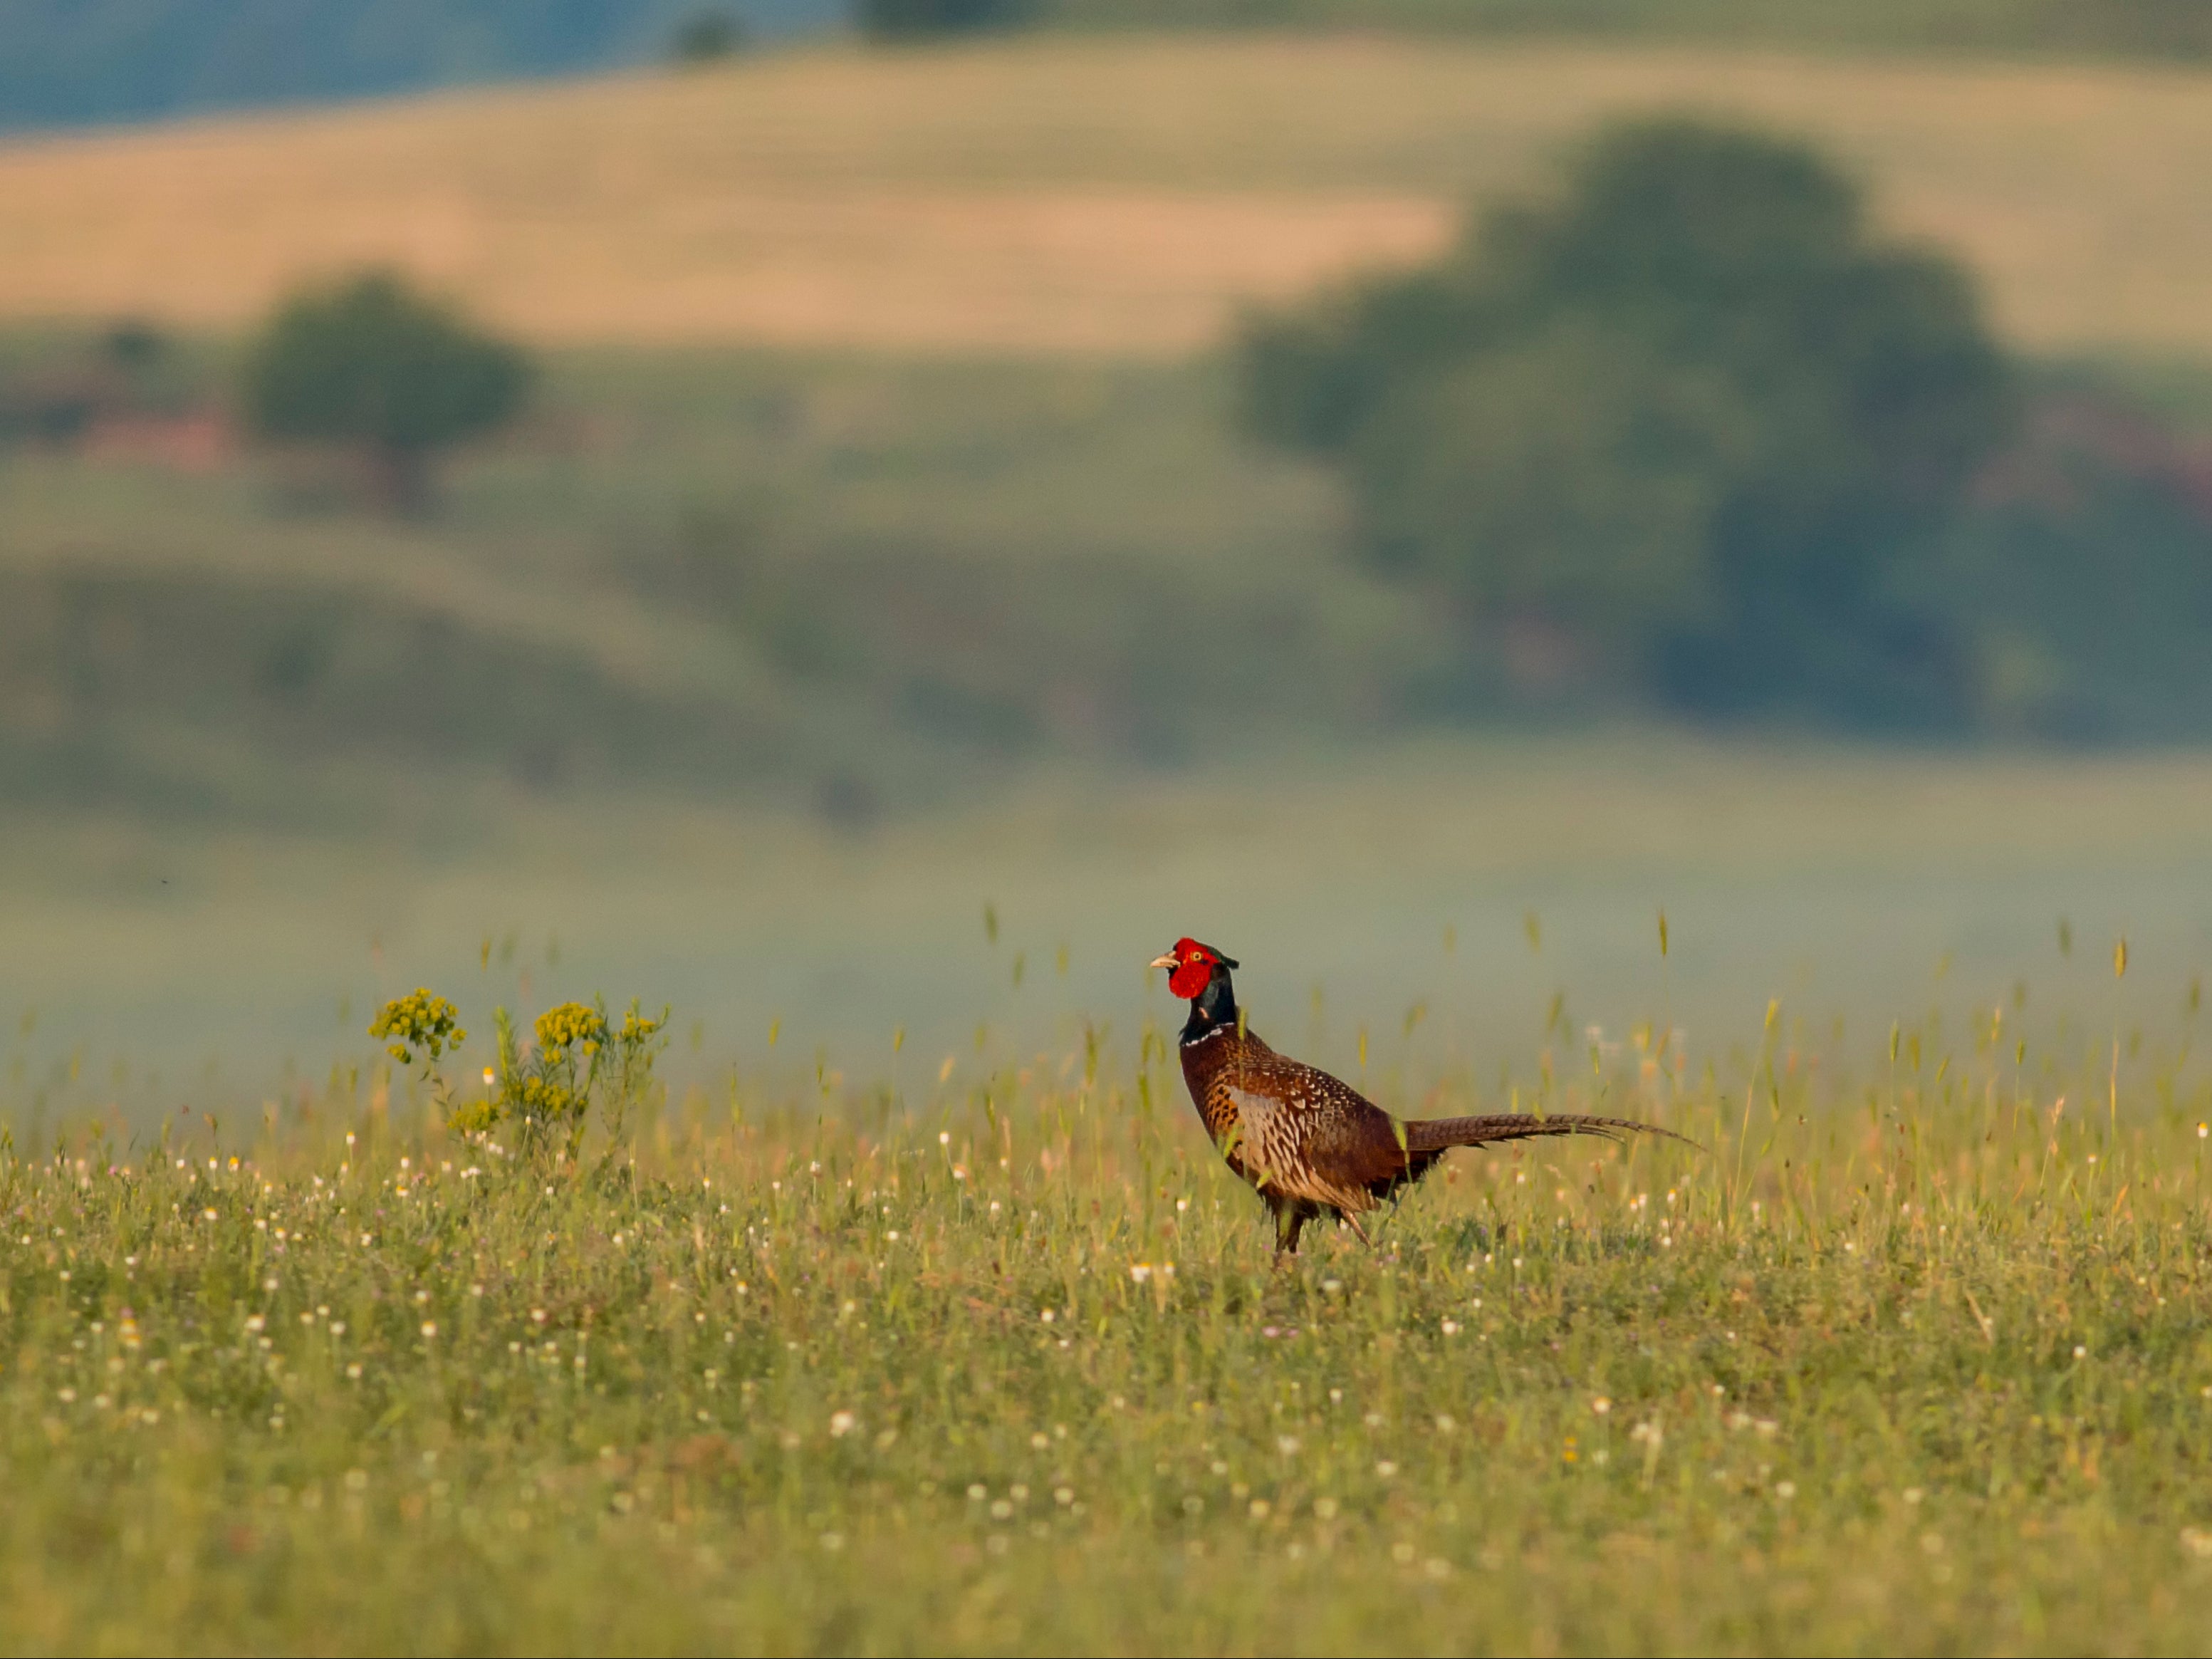 A pheasant sitting in a field